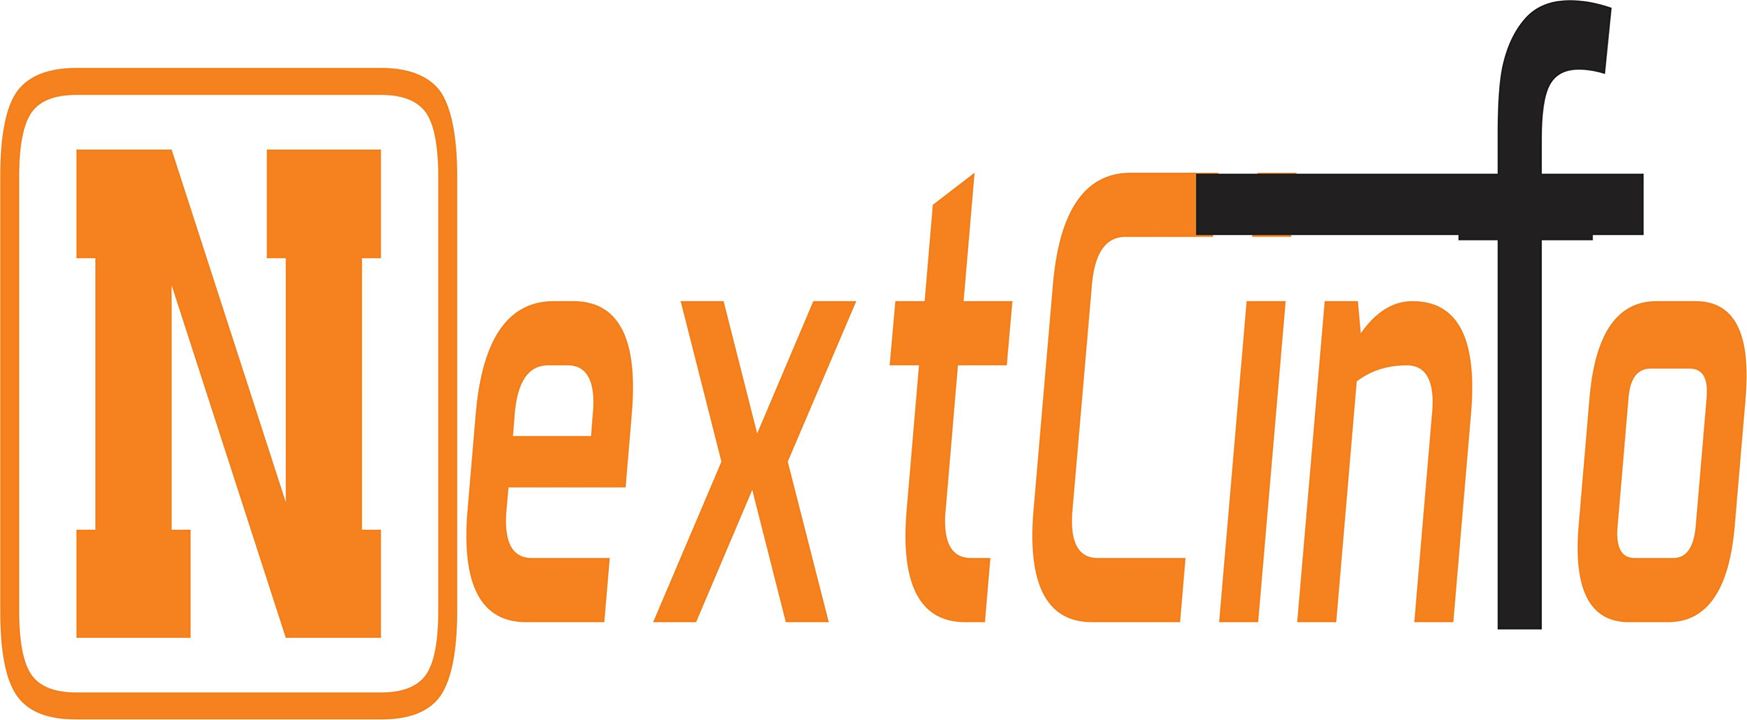 Nextcinfo Community Bot for Facebook Messenger